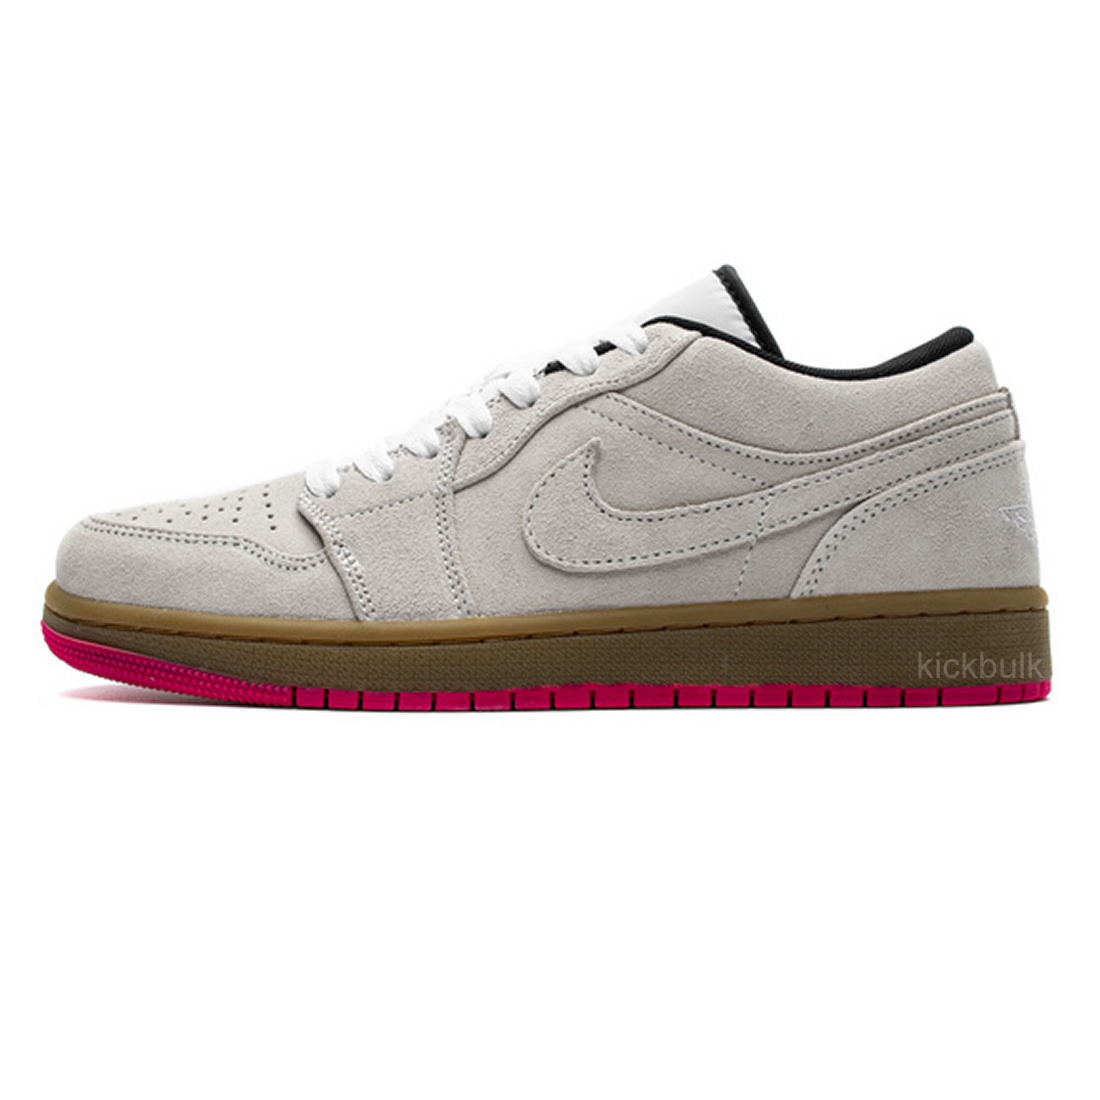 Nike Air Jordan 1 Low Hyper Pink 553558 119 1 - www.kickbulk.co